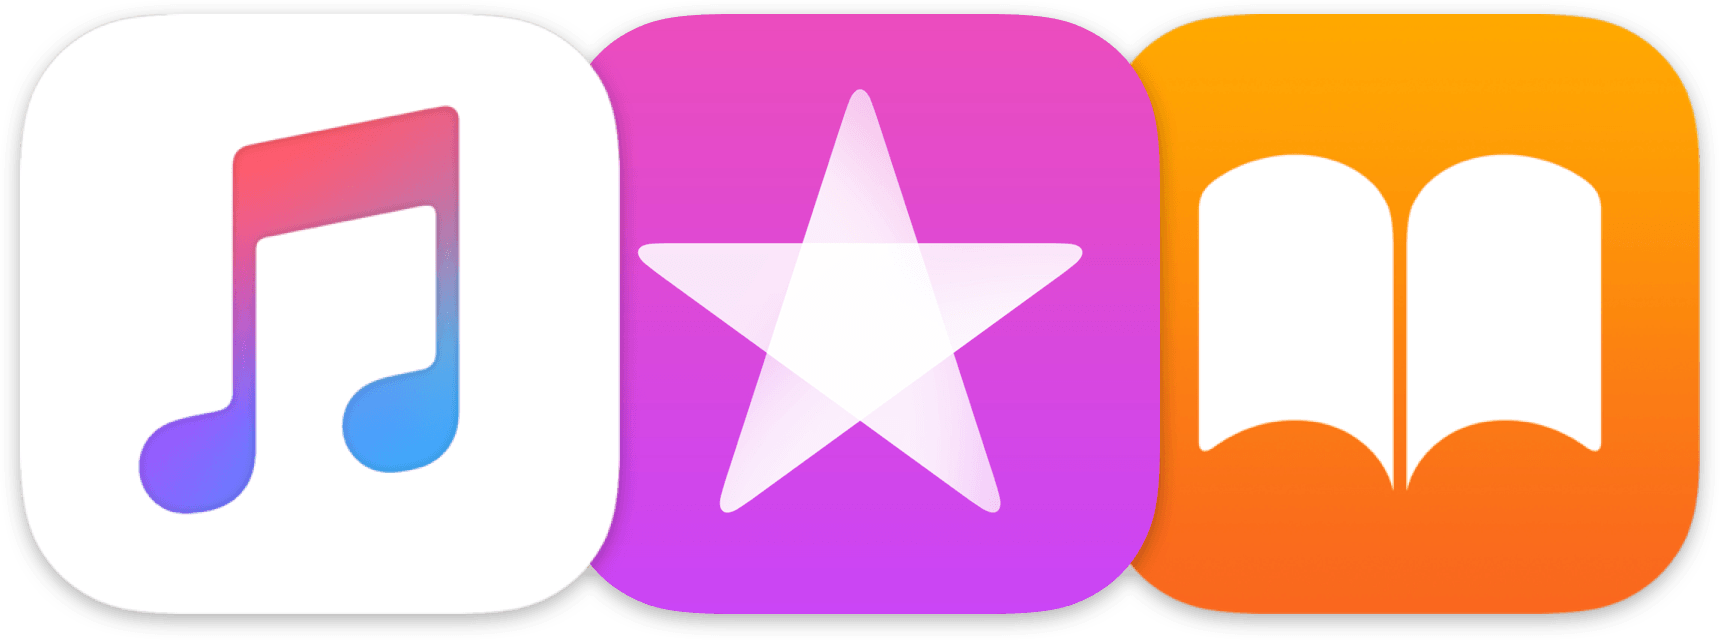 iTunes Application Logo - iTunes Search API